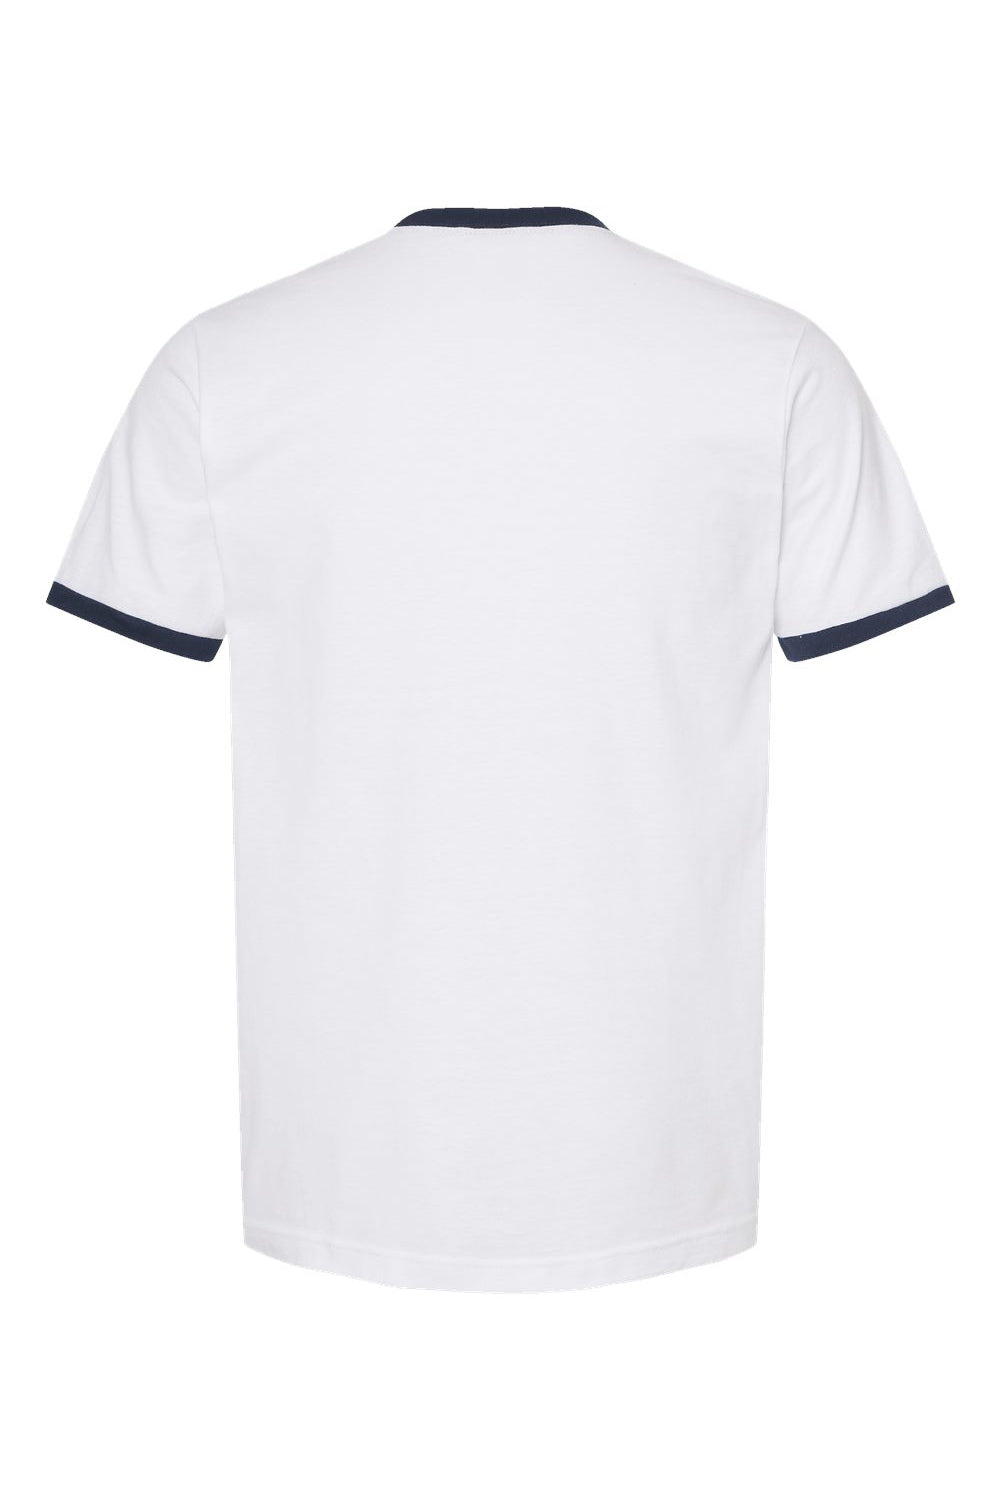 Tultex 246 Mens Fine Jersey Ringer Short Sleeve Crewneck T-Shirt White/Navy Blue Flat Back